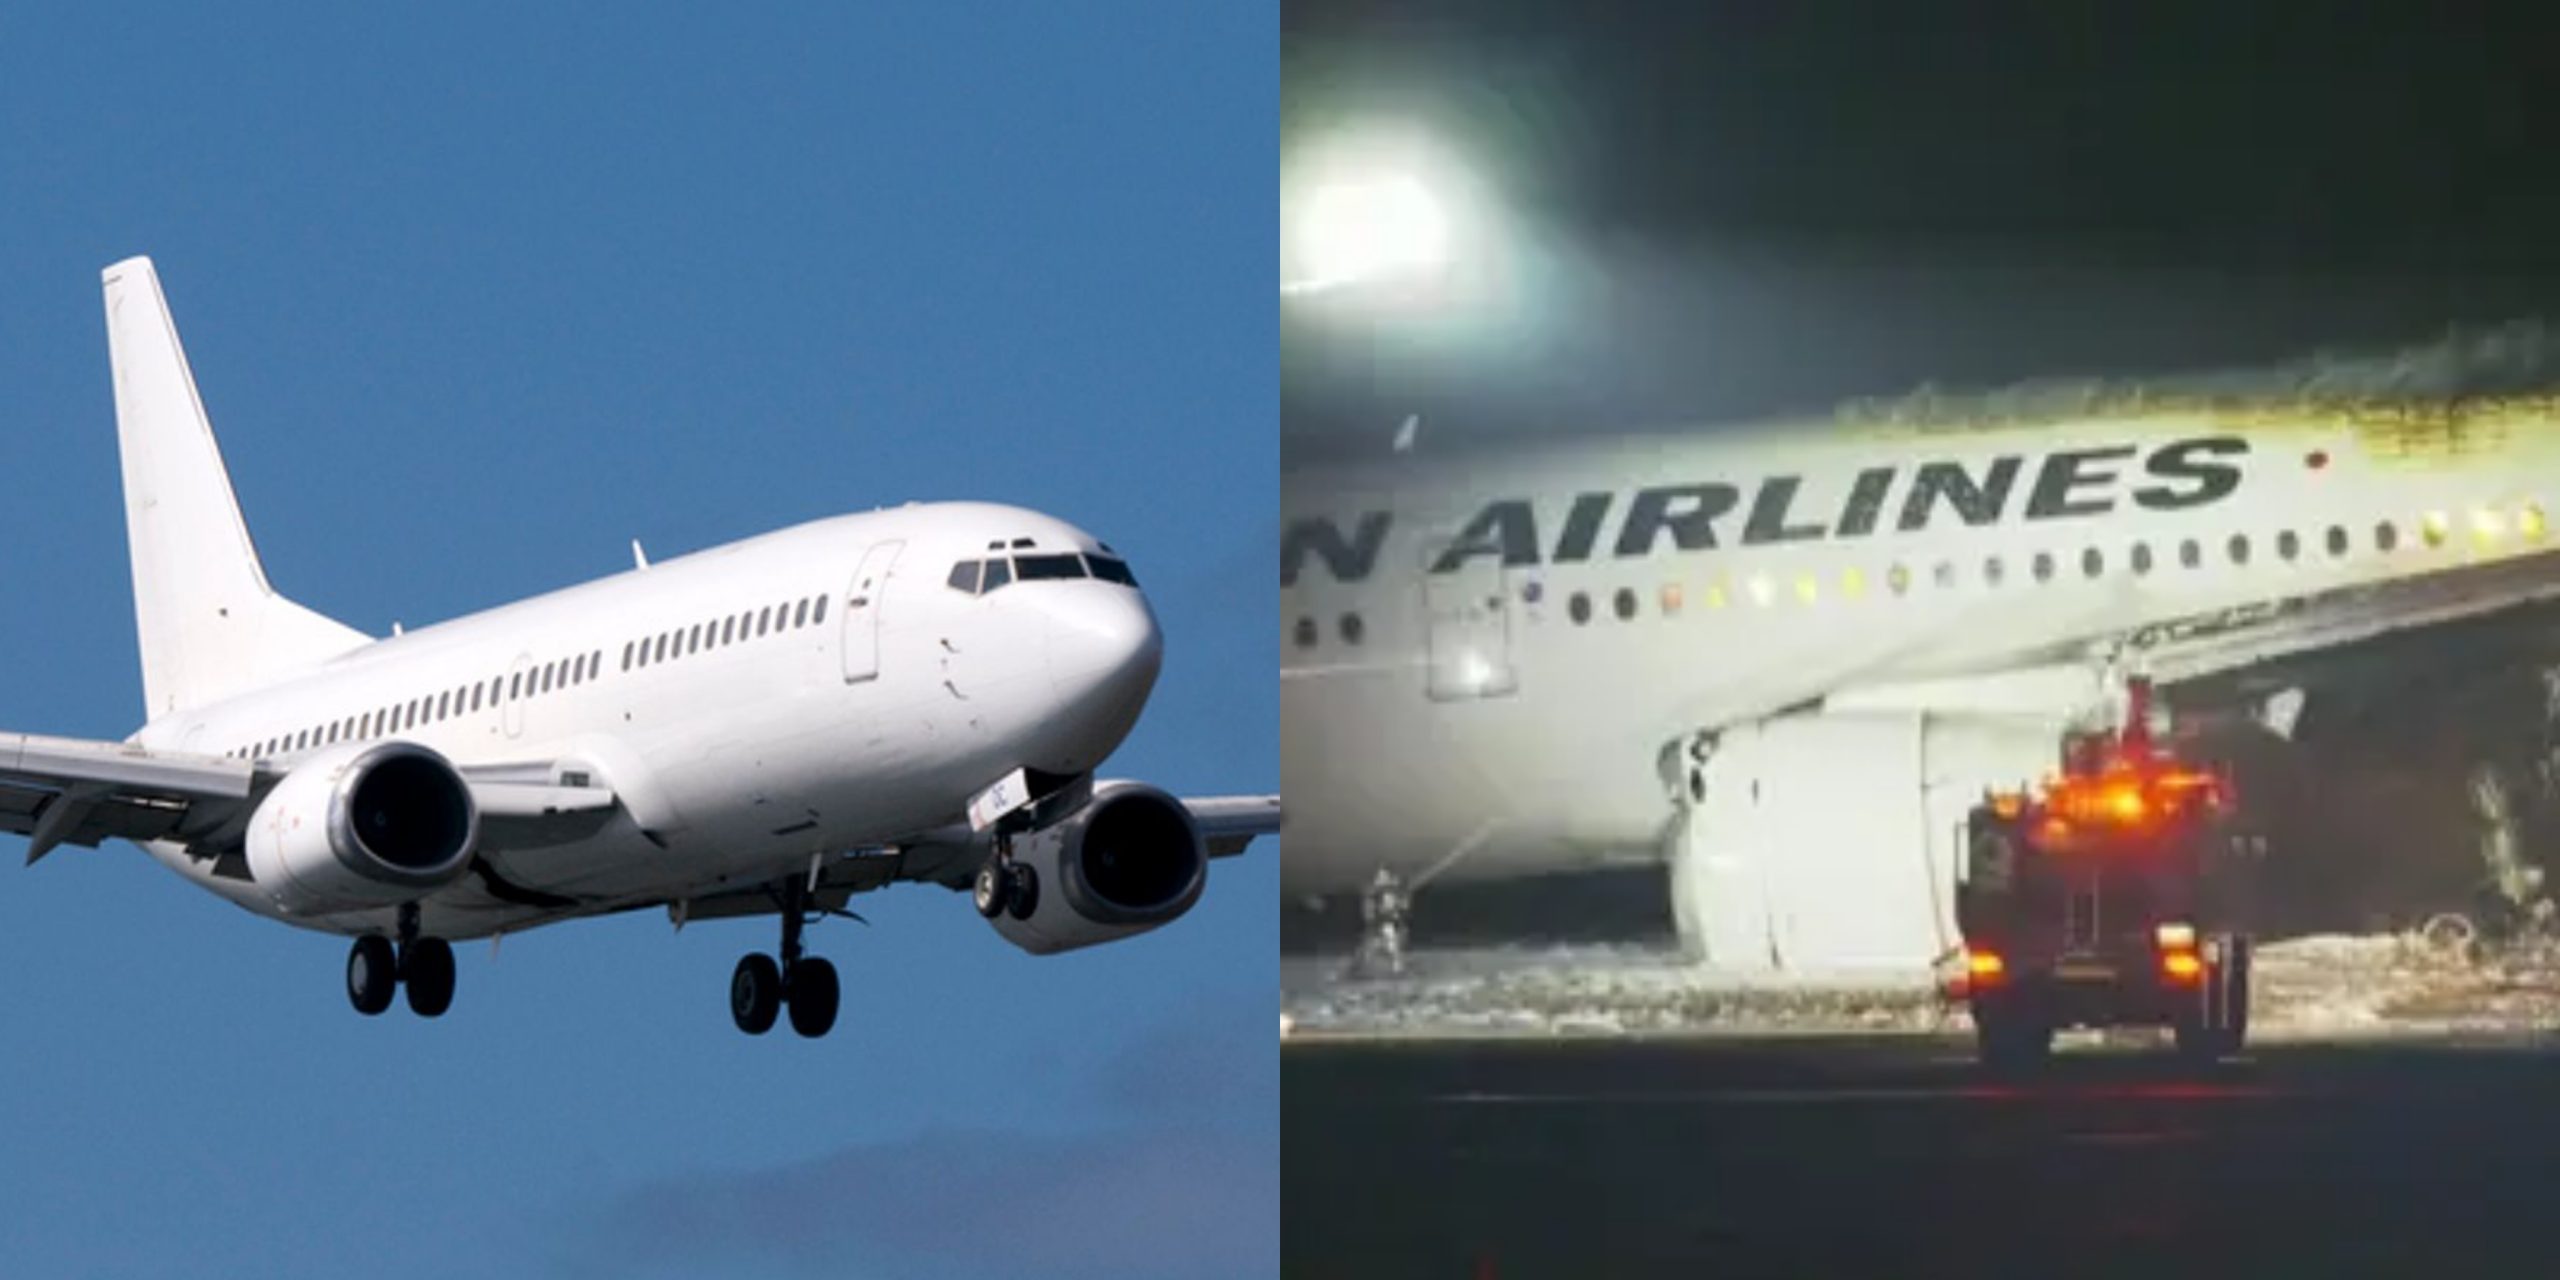 Plane carrying 379 passengers crash lands, bursts into flames [Video]